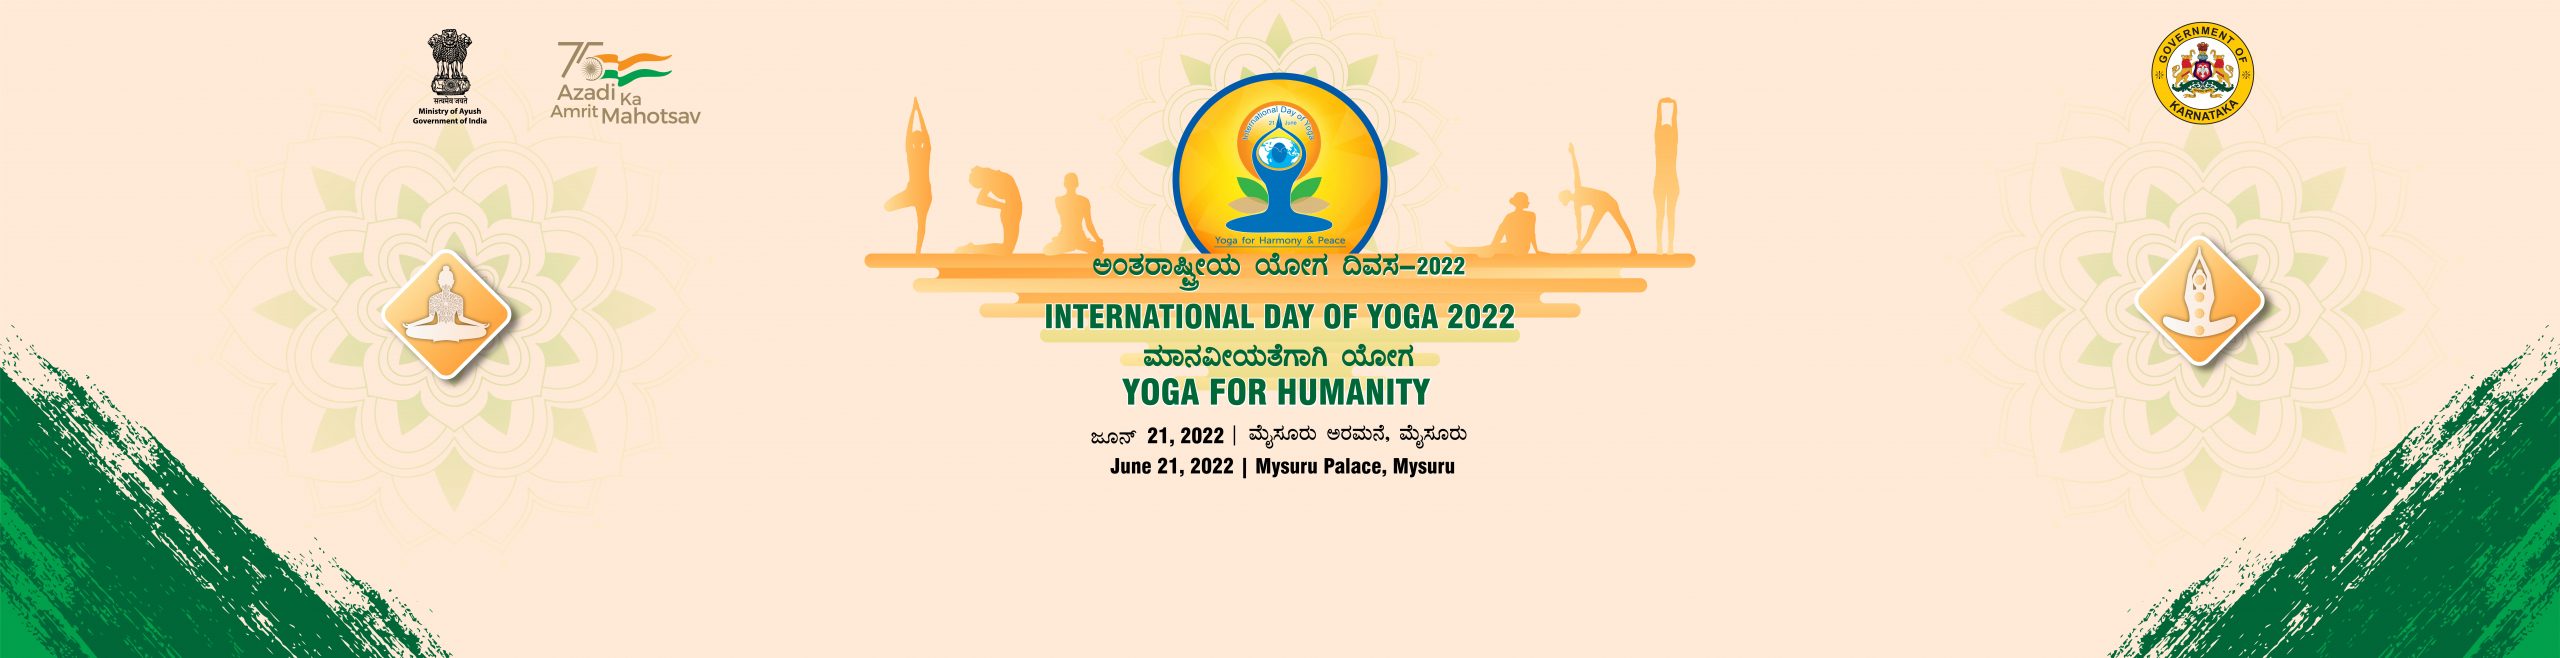 International yoga day banner